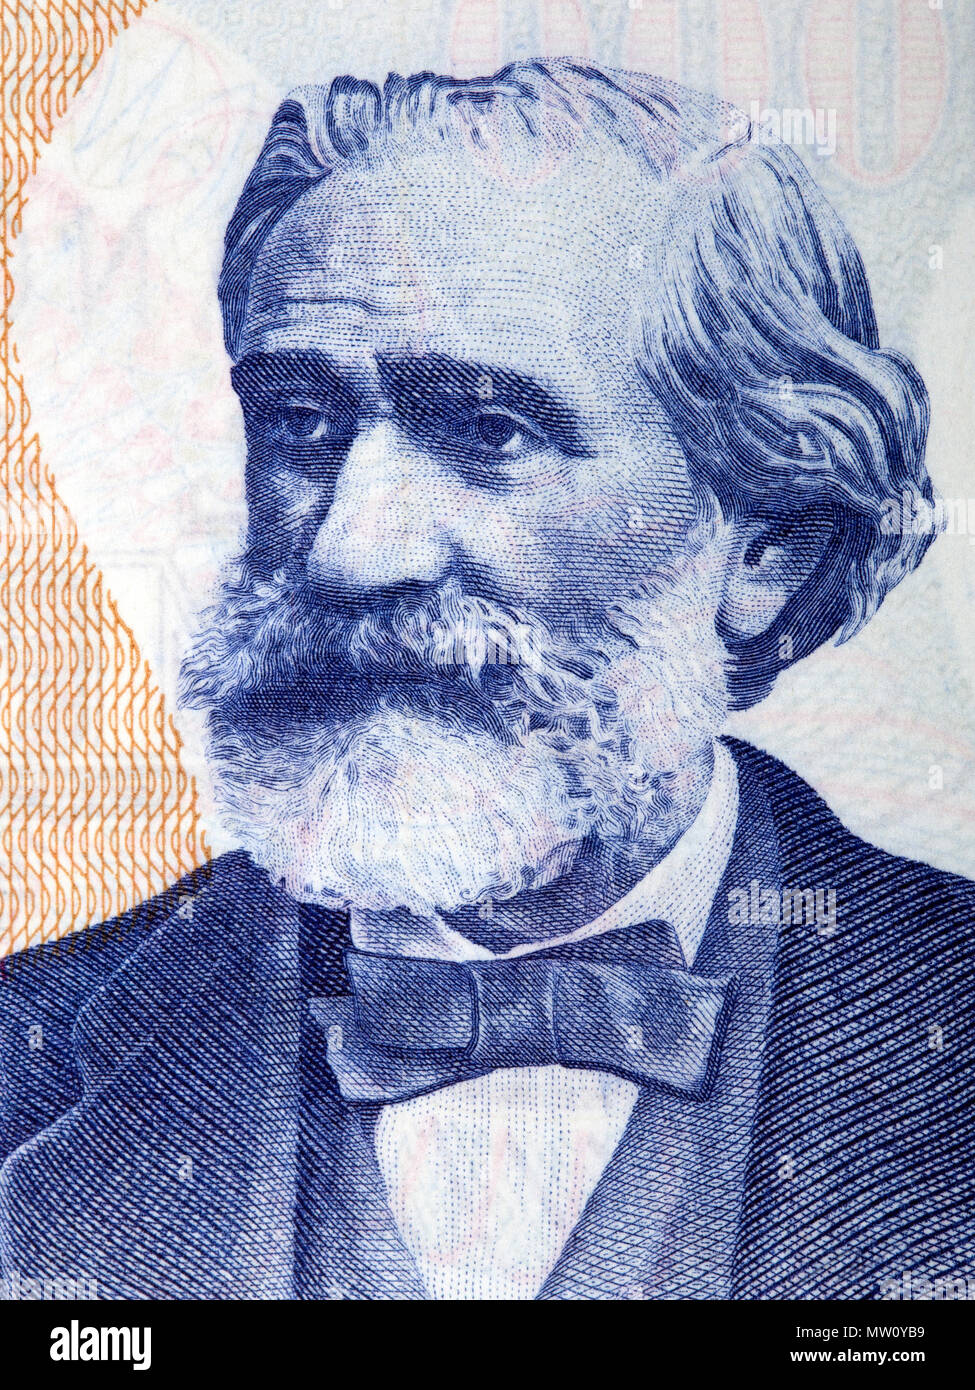 Giuseppe Verdi portrait from Italian money Stock Photo